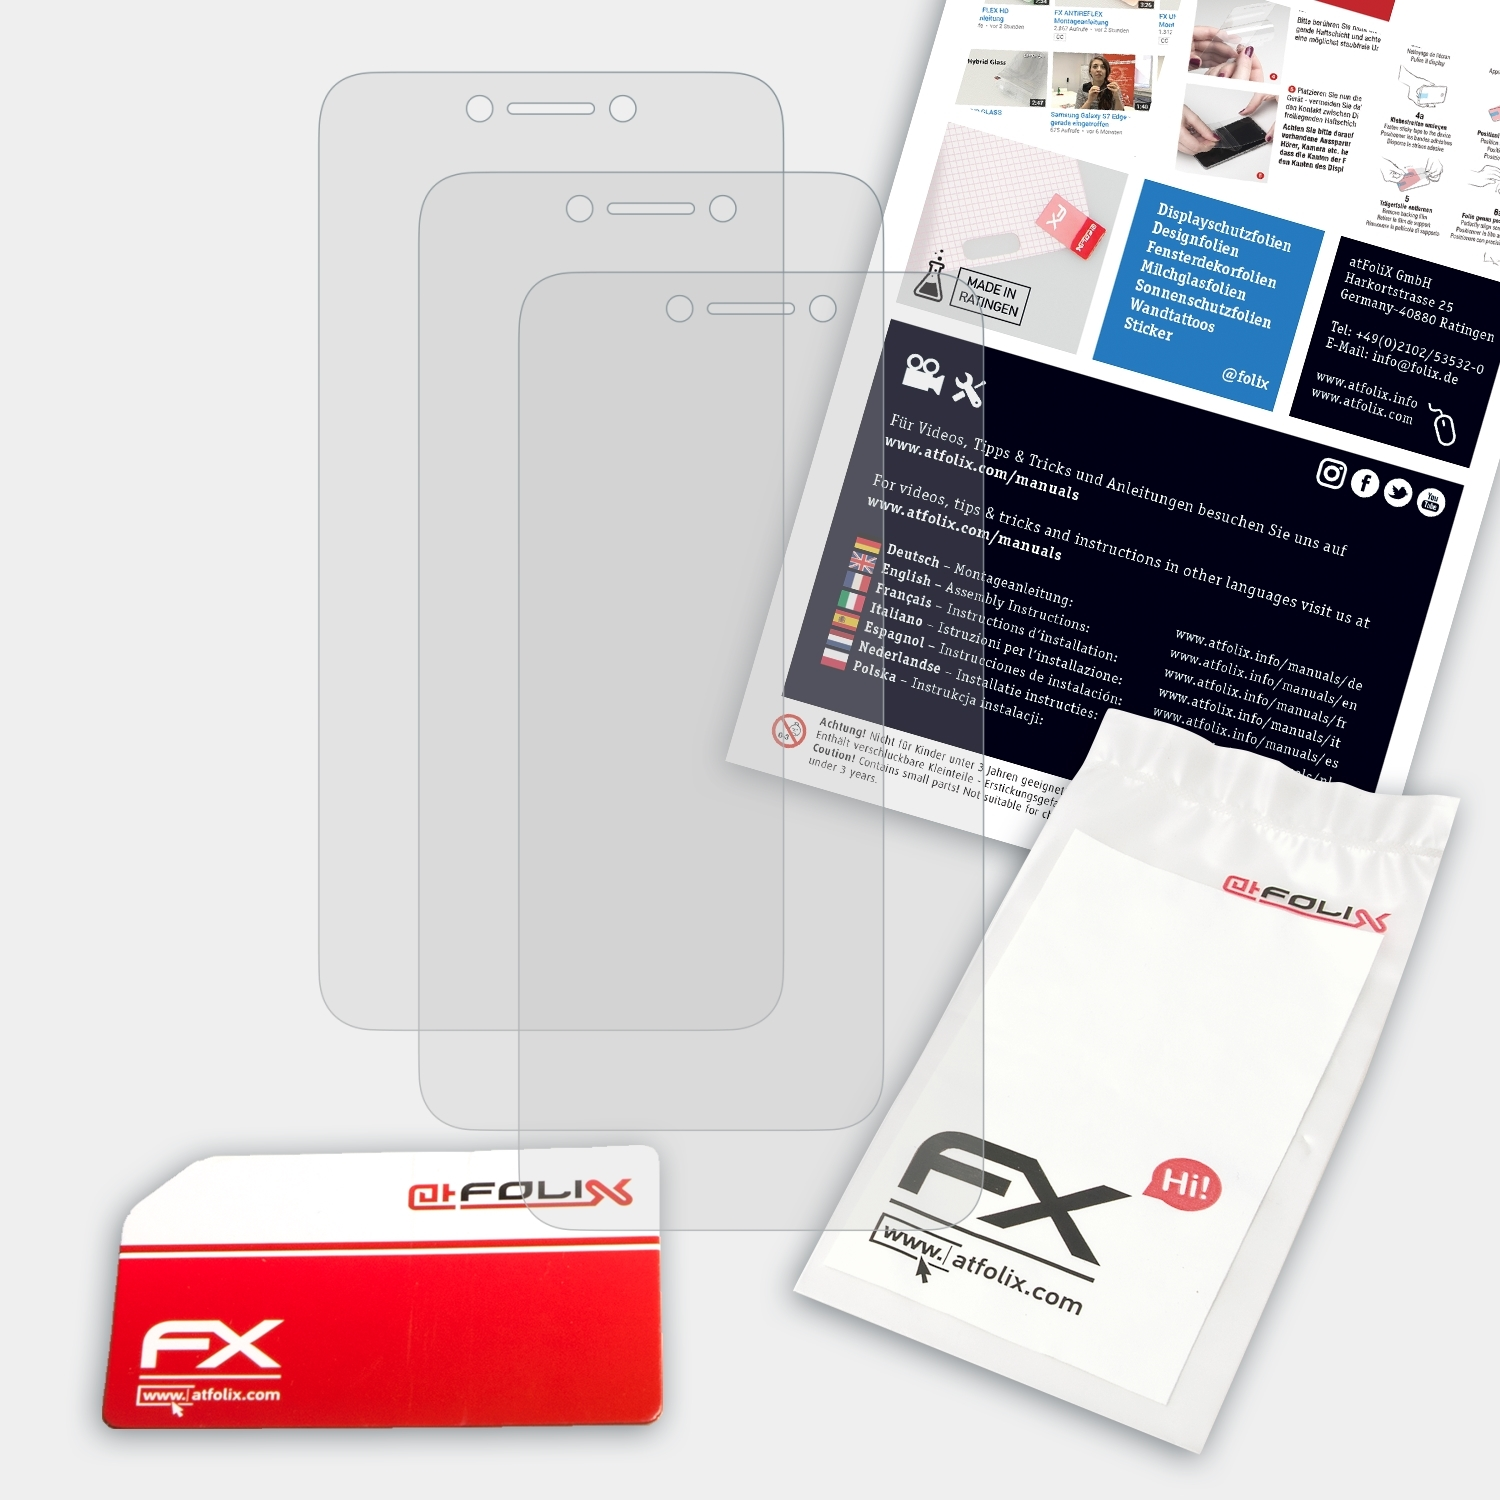 ATFOLIX 3x FX-Antireflex Cool1 Displayschutz(für Dual) Coolpad